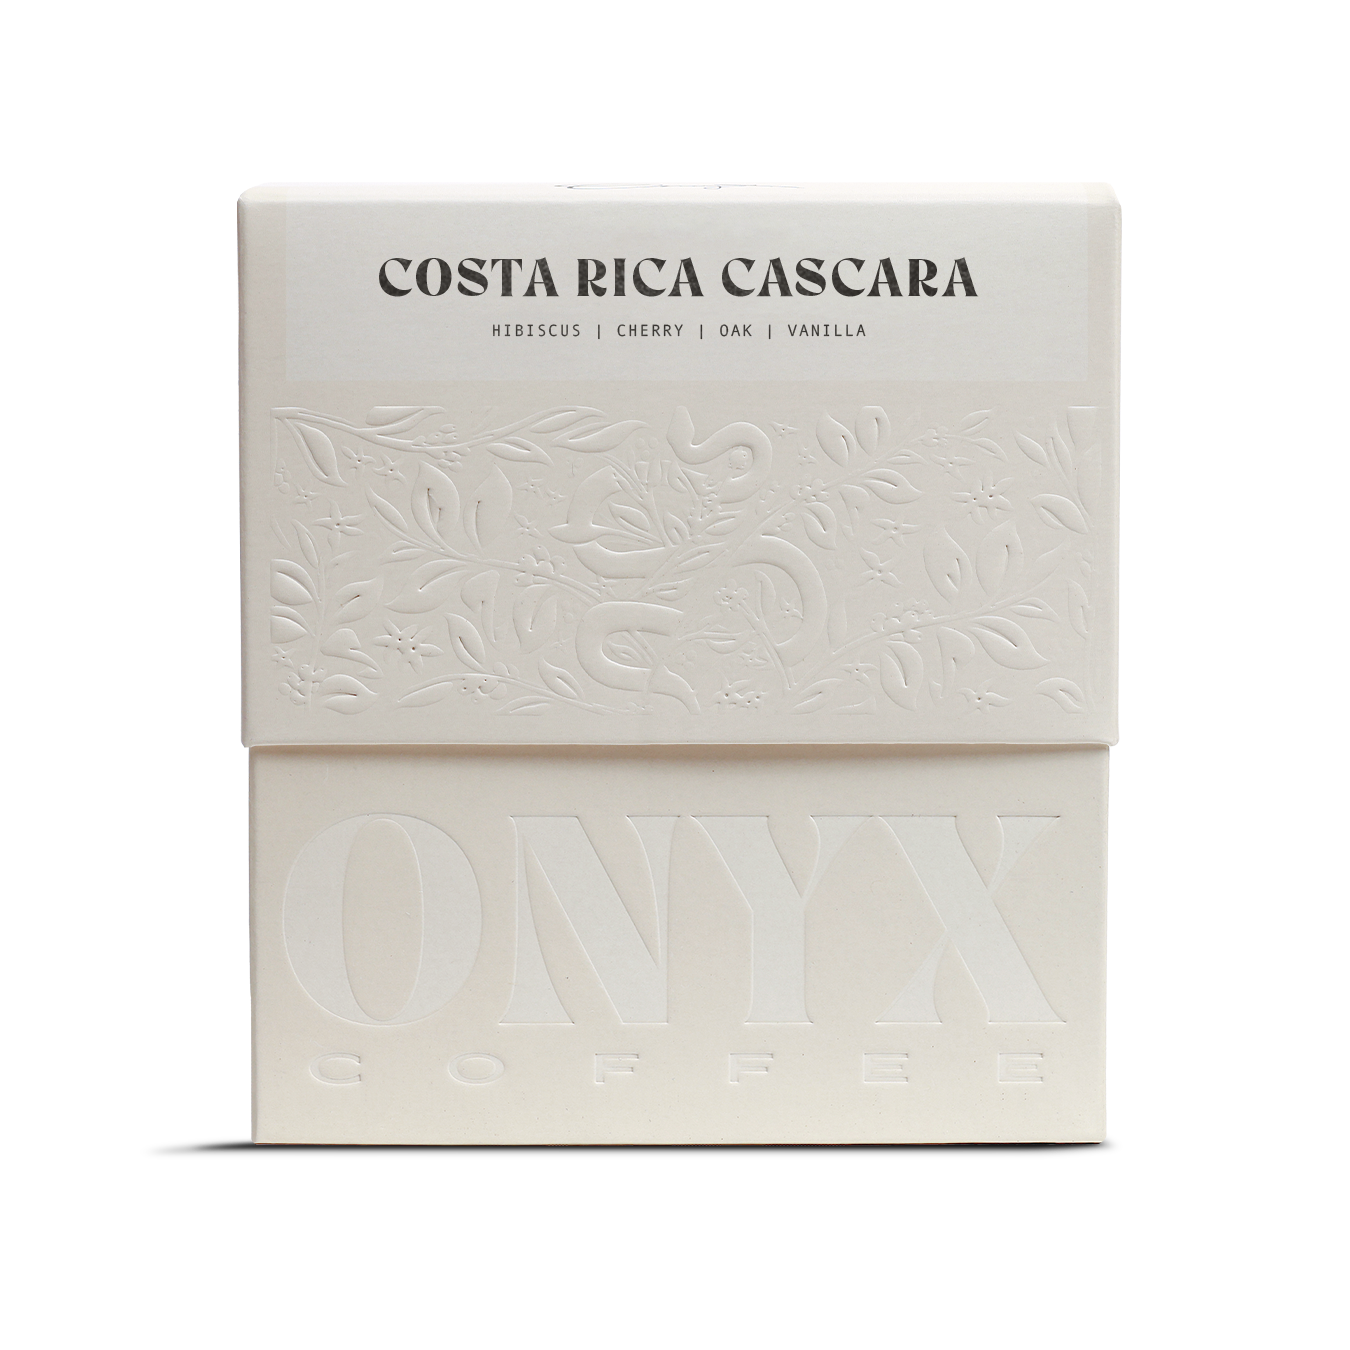 Onyx Lab Costa Rica Cascara tea